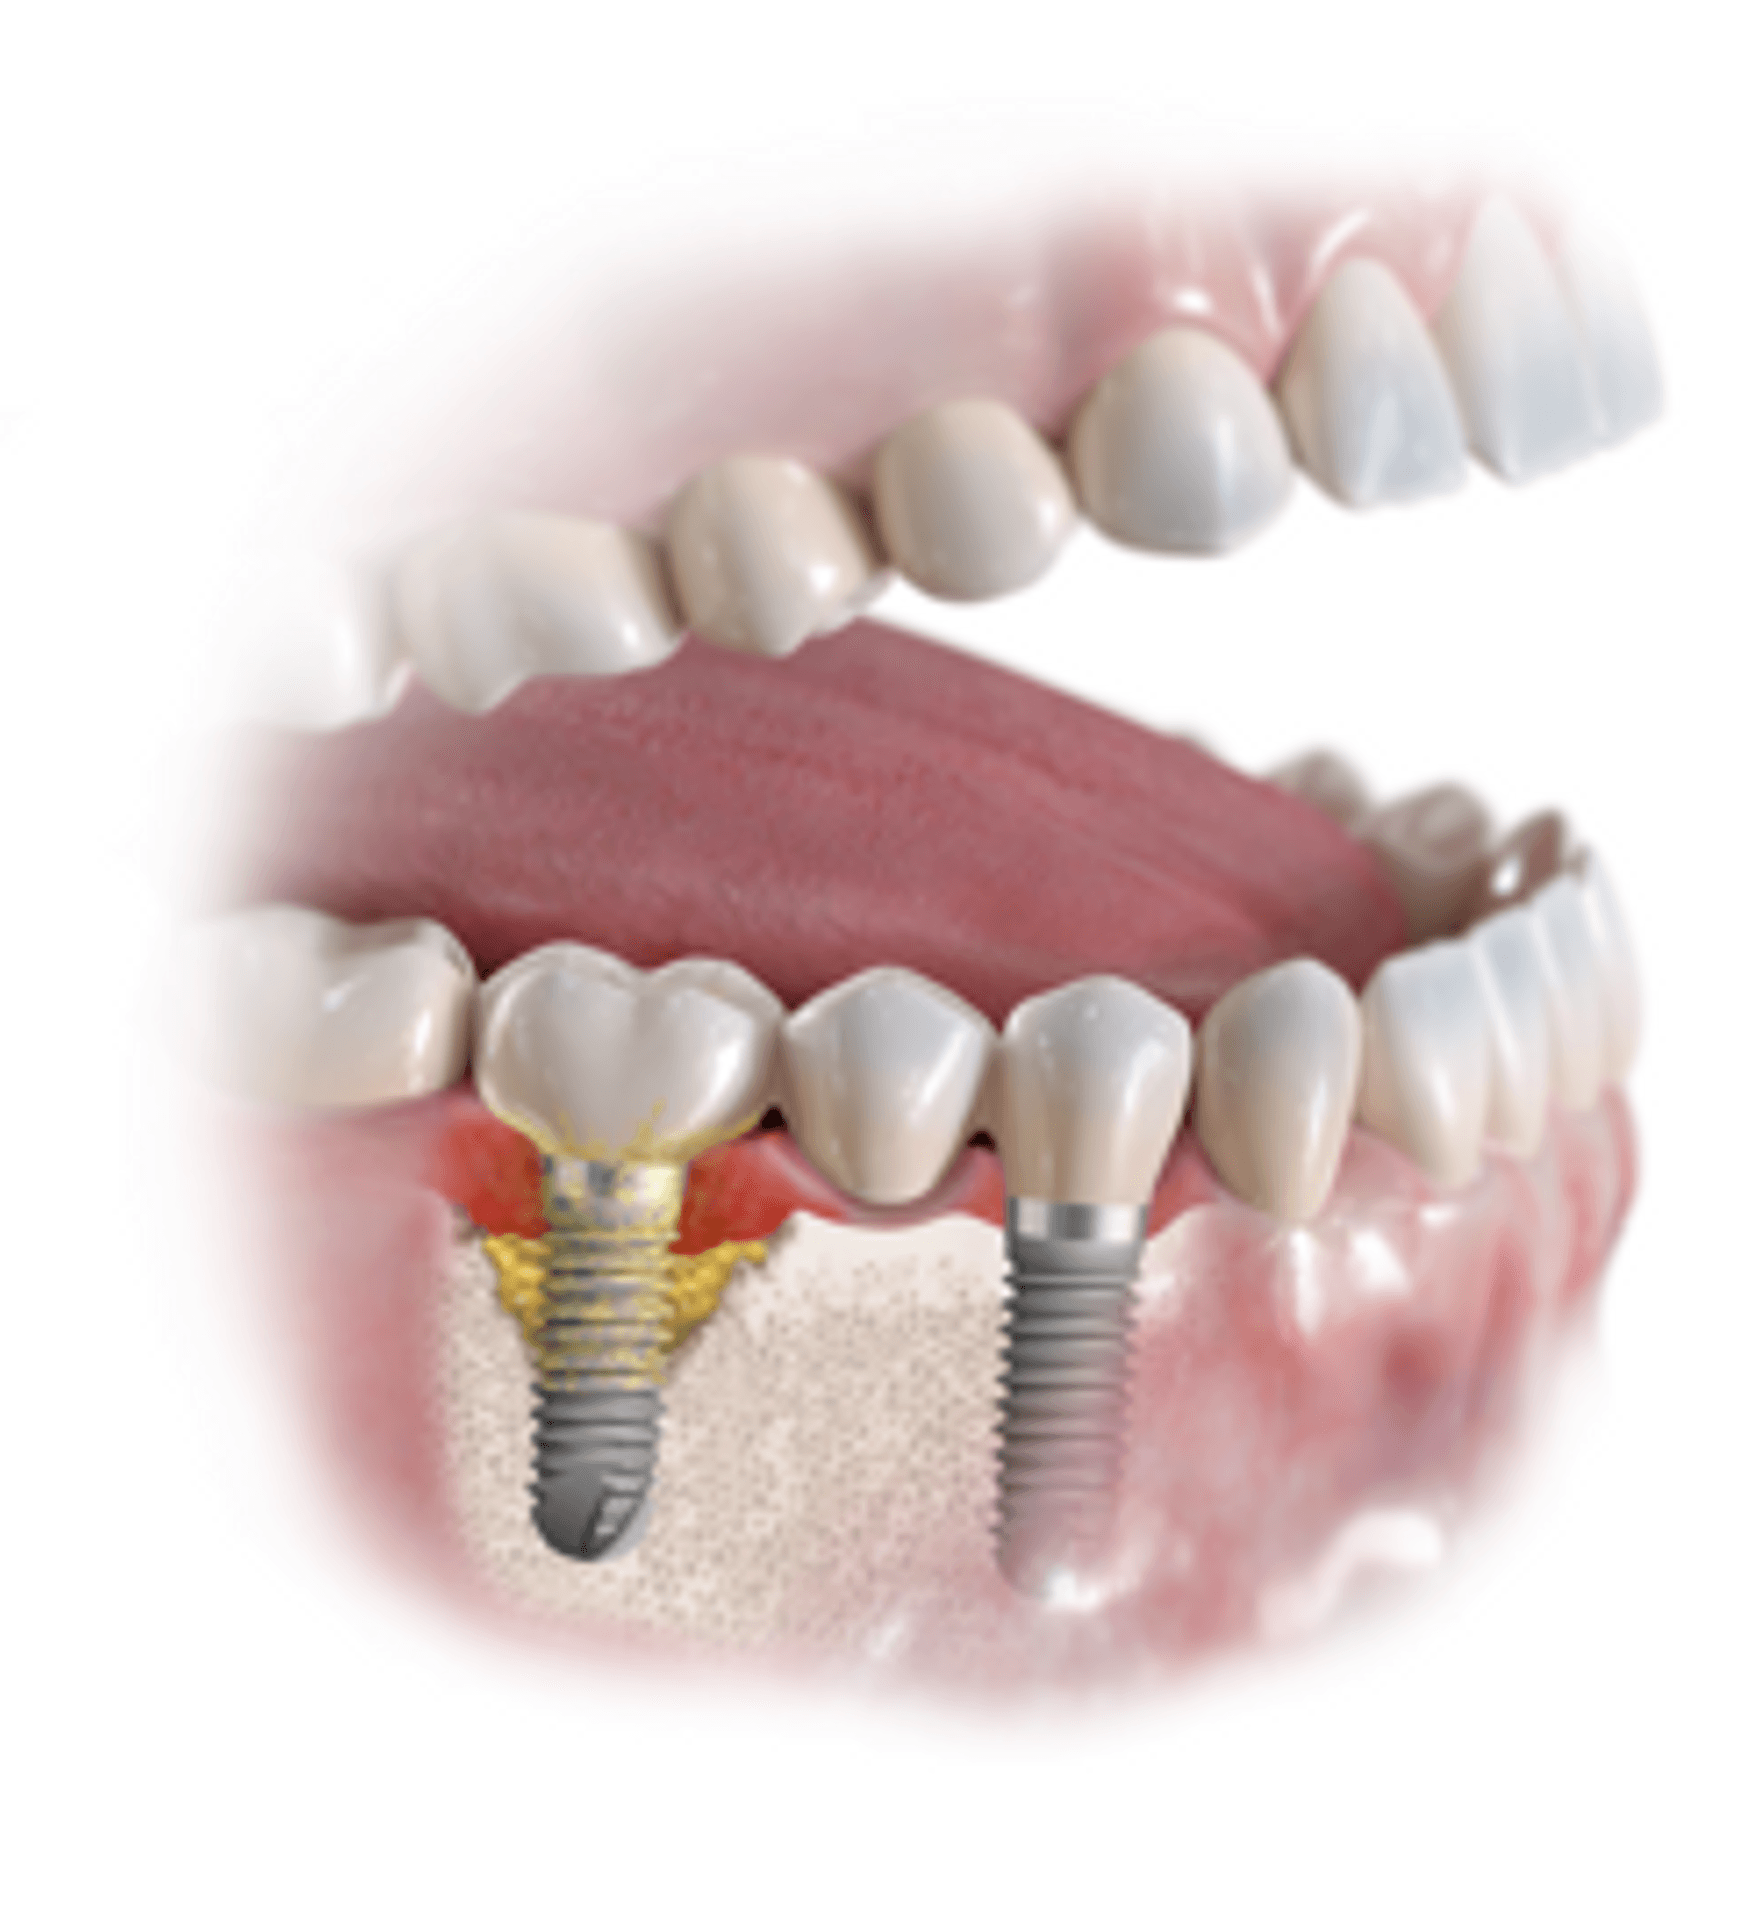 Fortgeschrittene Entzündung um ein Zahnimplantat